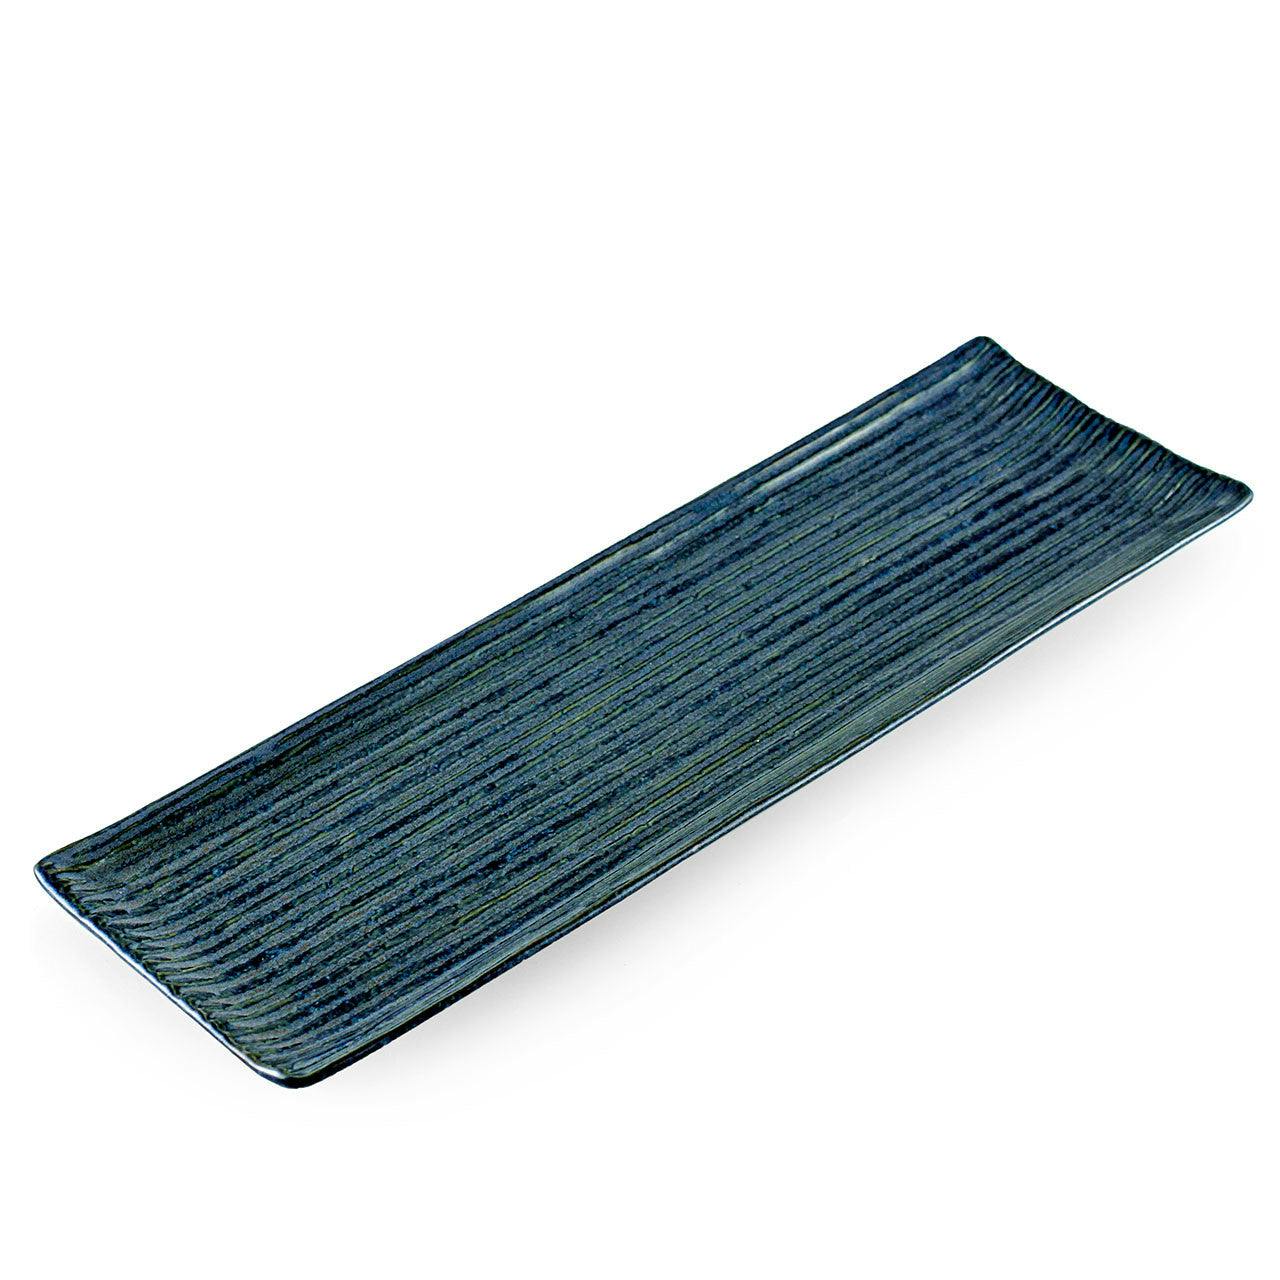 Ai Blue Rectangular Plate with Lines 深蓝带条纹 长方形 寿司 盘子 13.2" x 4.2"